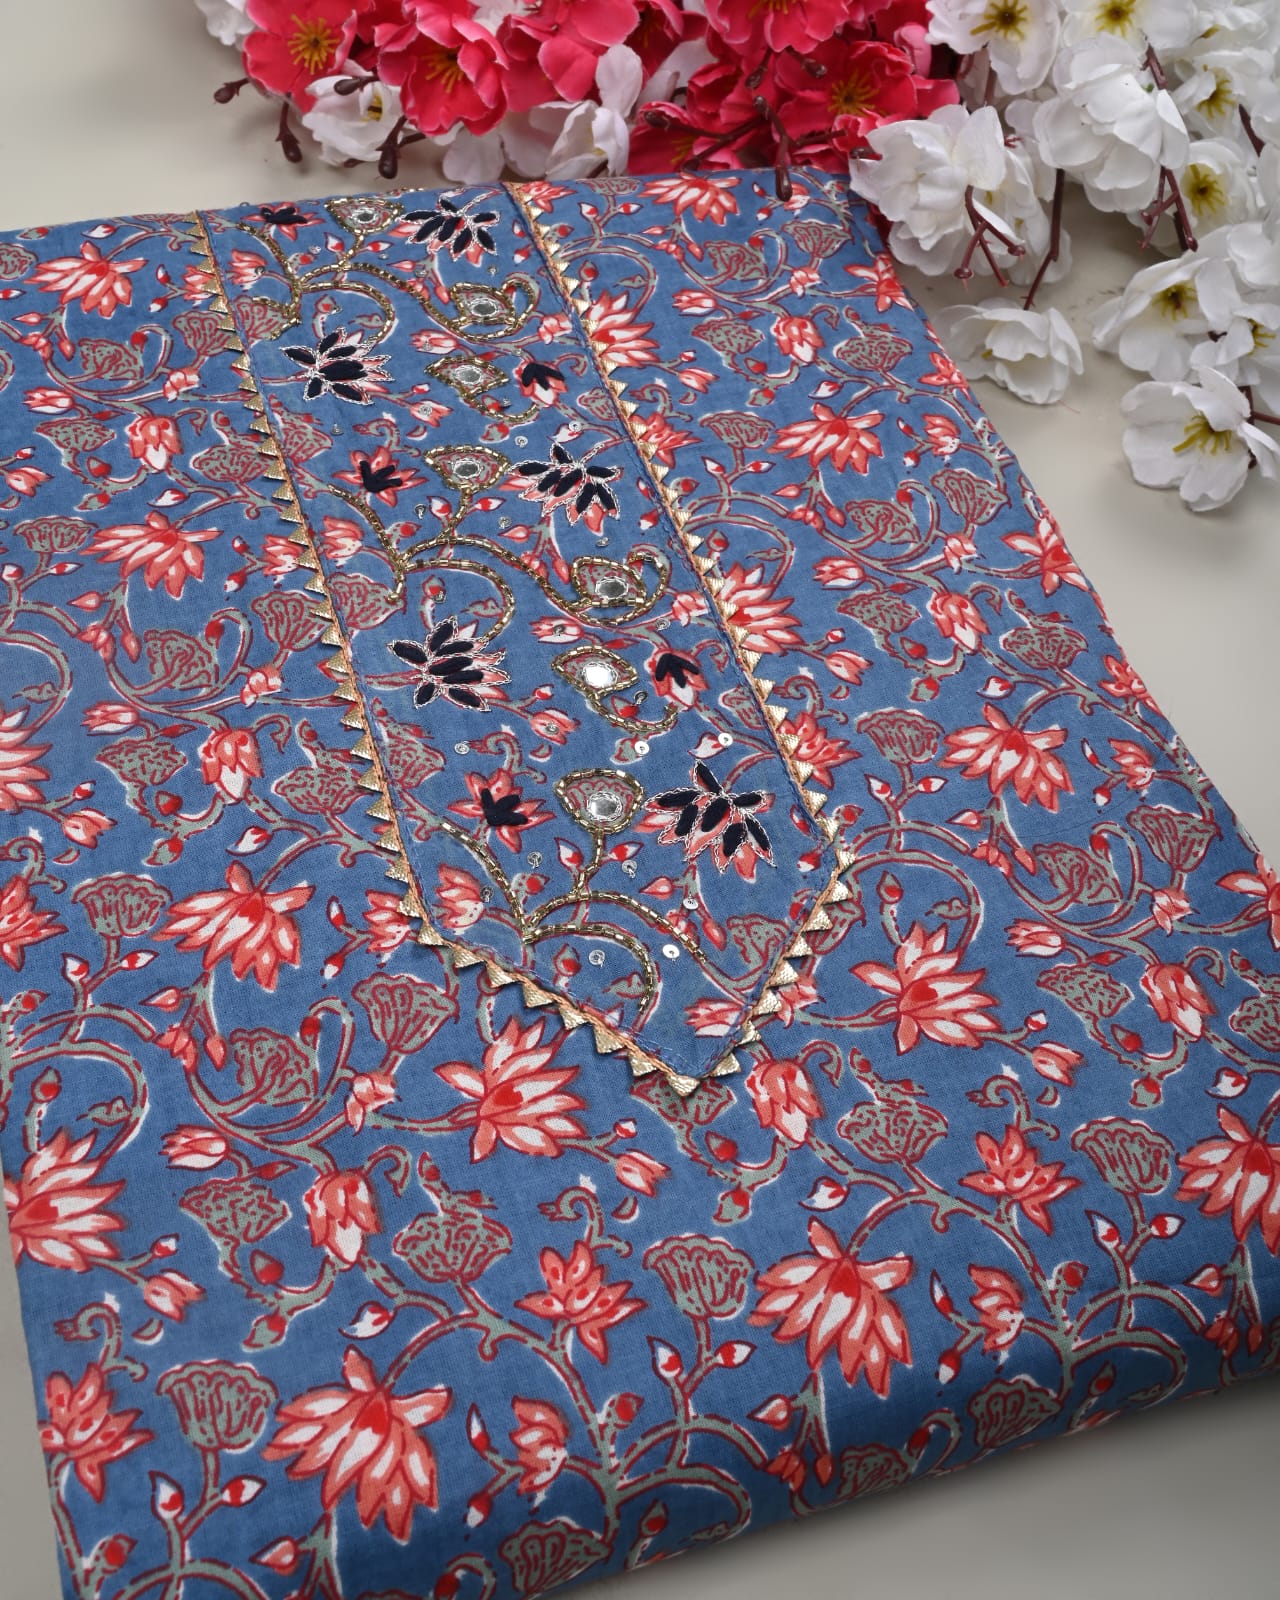 Cornflower Blue cotton gota embroidery party wear suit for ladies online with cotton dupatta